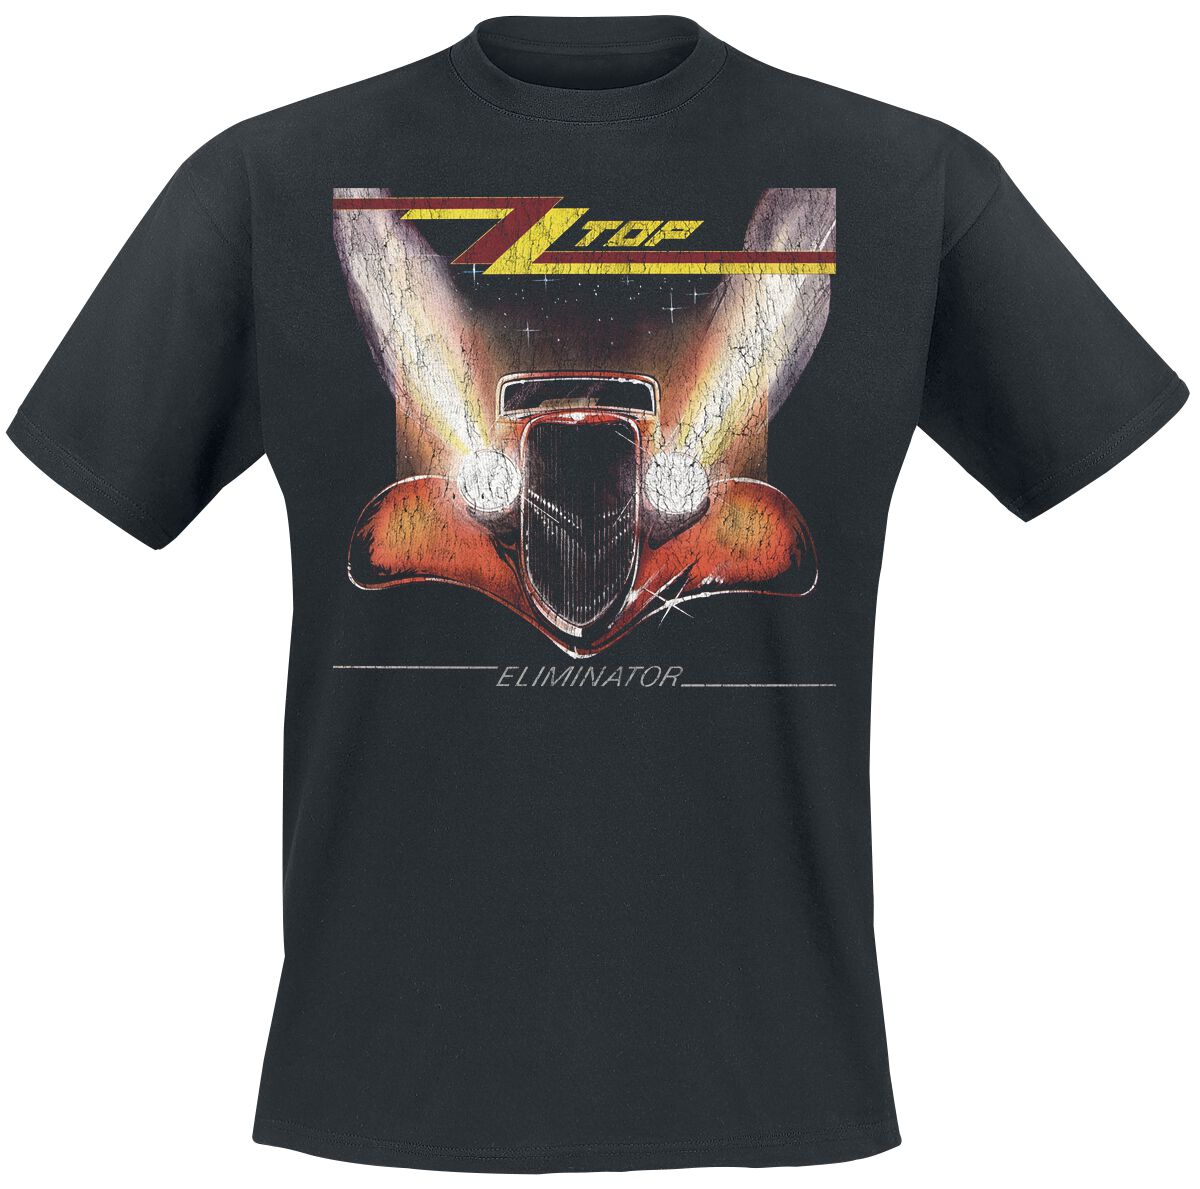 ZZ Top Eliminator T-Shirt schwarz in L